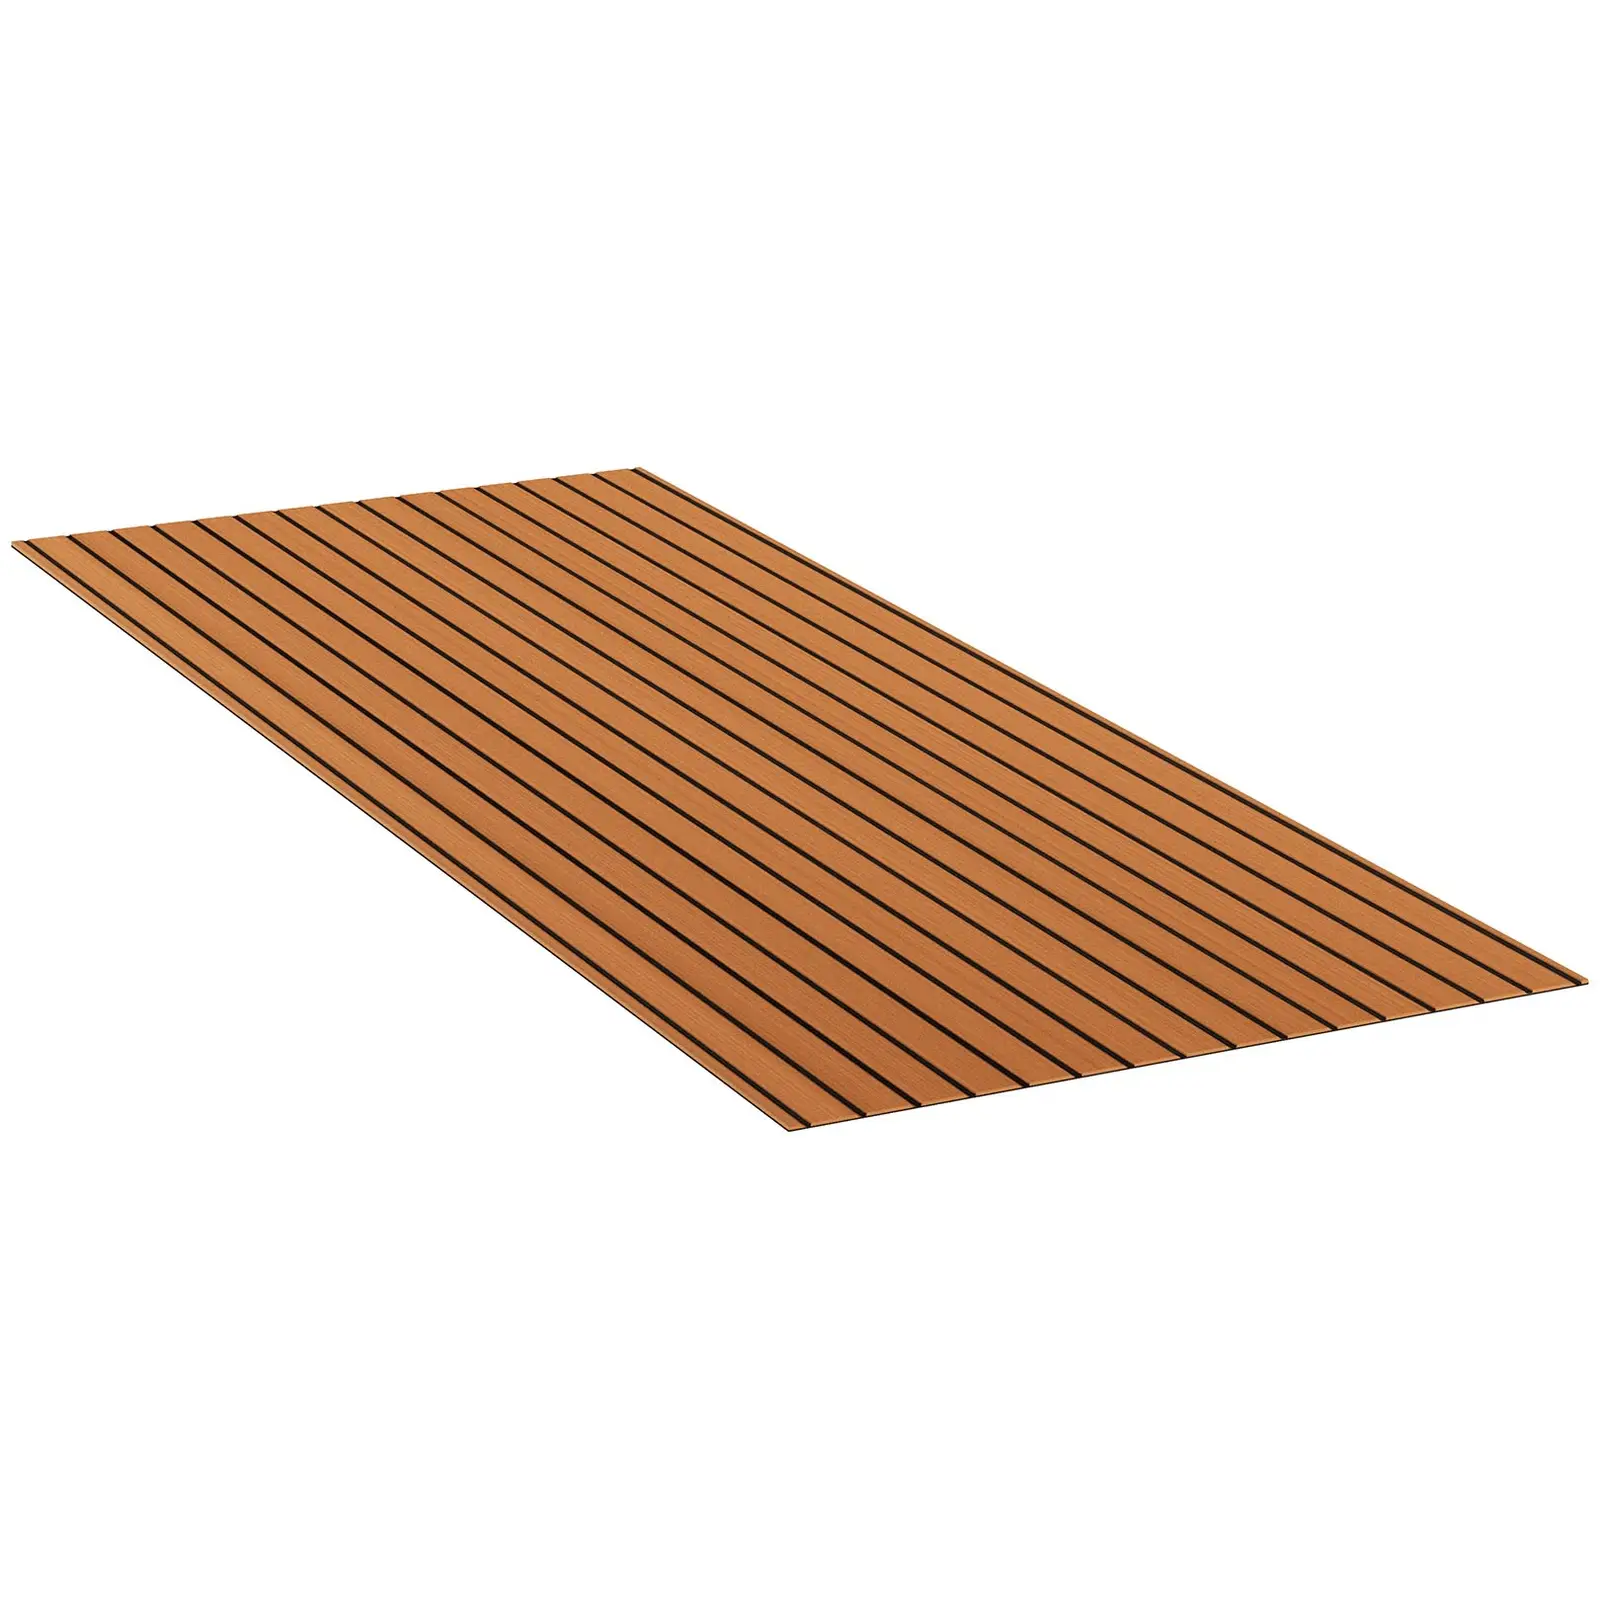 Valčių grindys - 240 x 90 cm - rudos/juodos spalvos